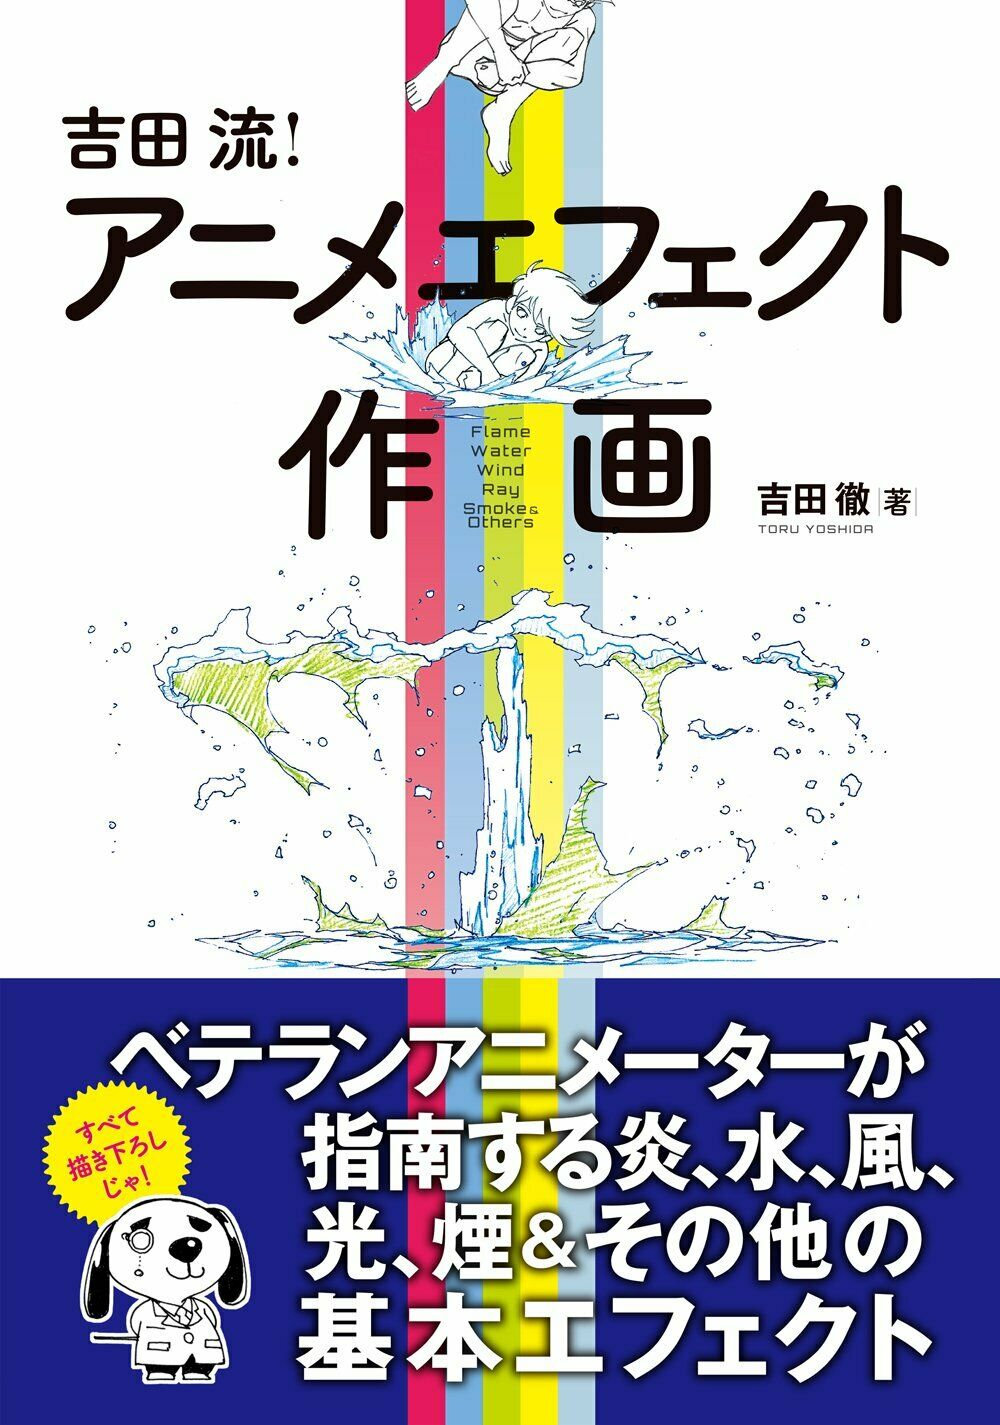 NEW' How To Draw Manga Toru Yoshida Anime Effect Drawing Technique | Japan Book